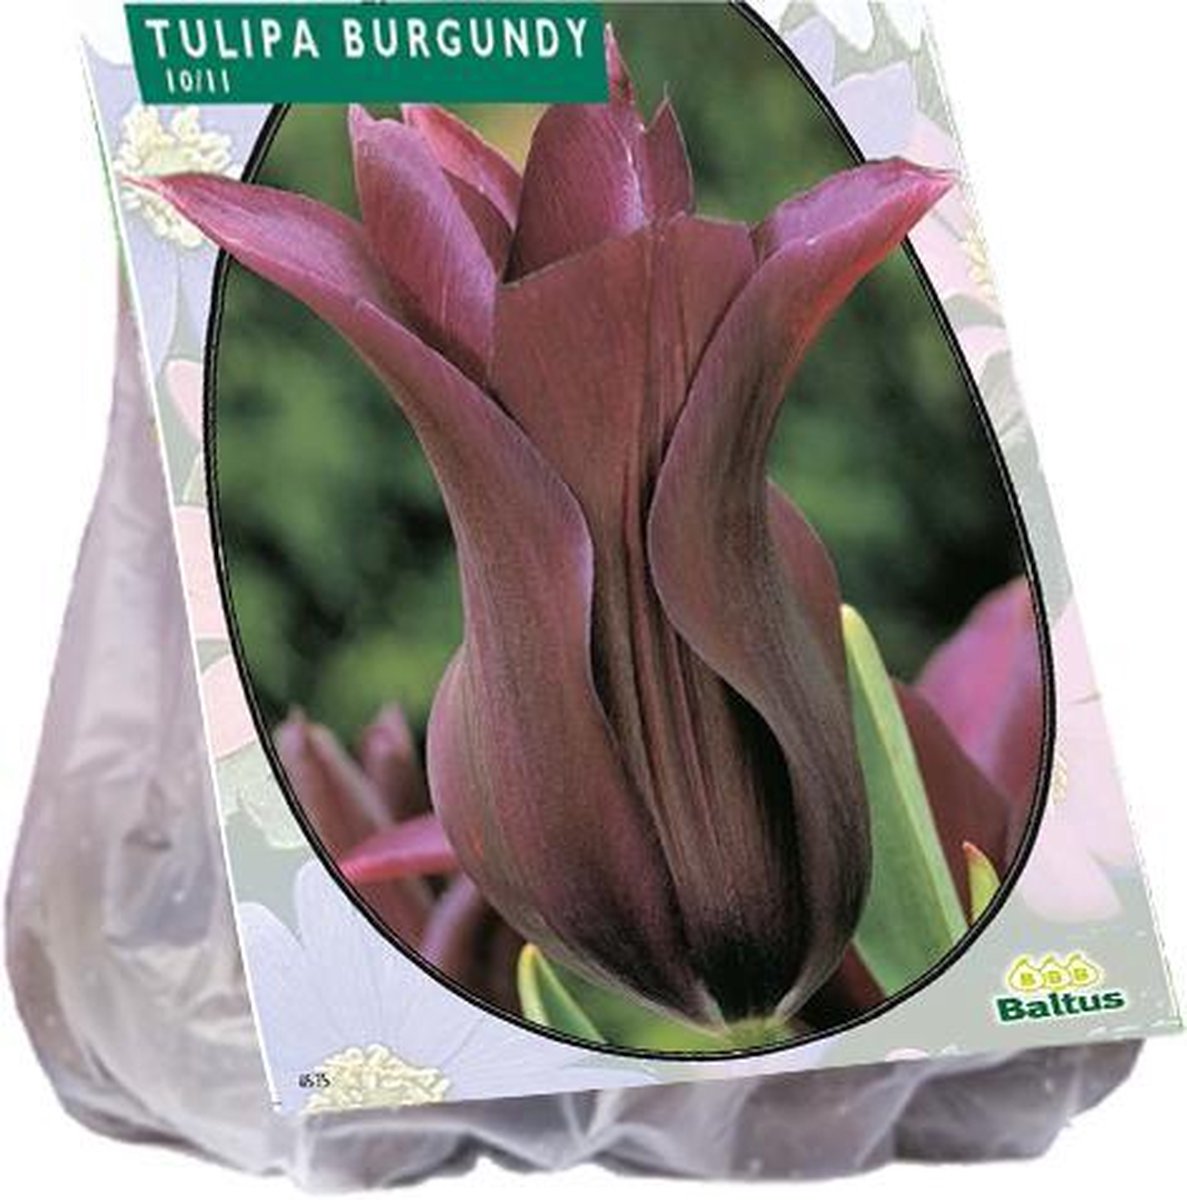 Tulipa (Tulpen) bloembollen - Burgundy Leliebloemig - 1 x 12 stuks